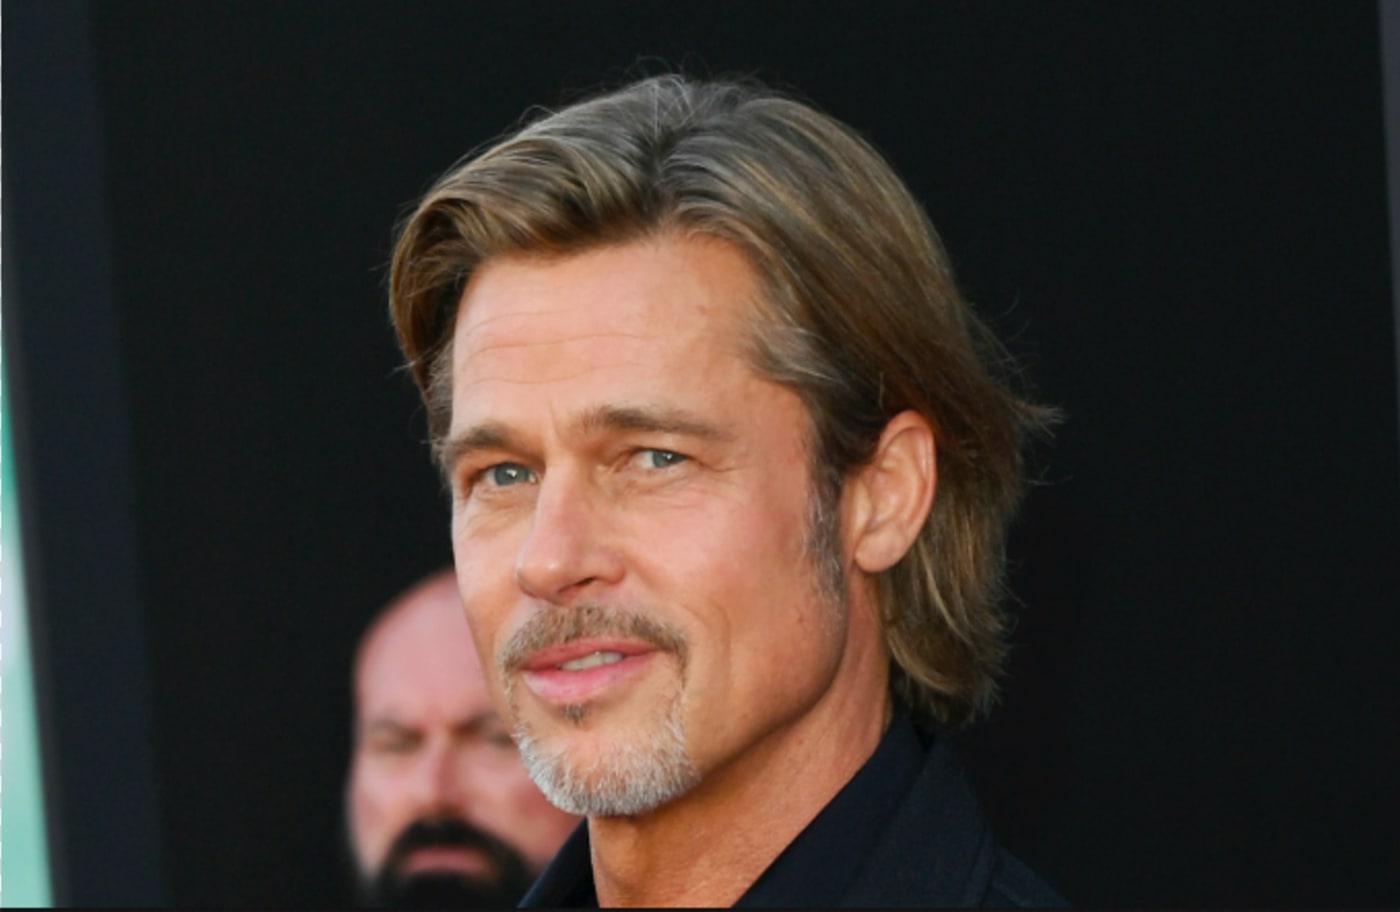 Brad Pitt attends the Premiere Of 20th Century Fox's "Ad Astra"